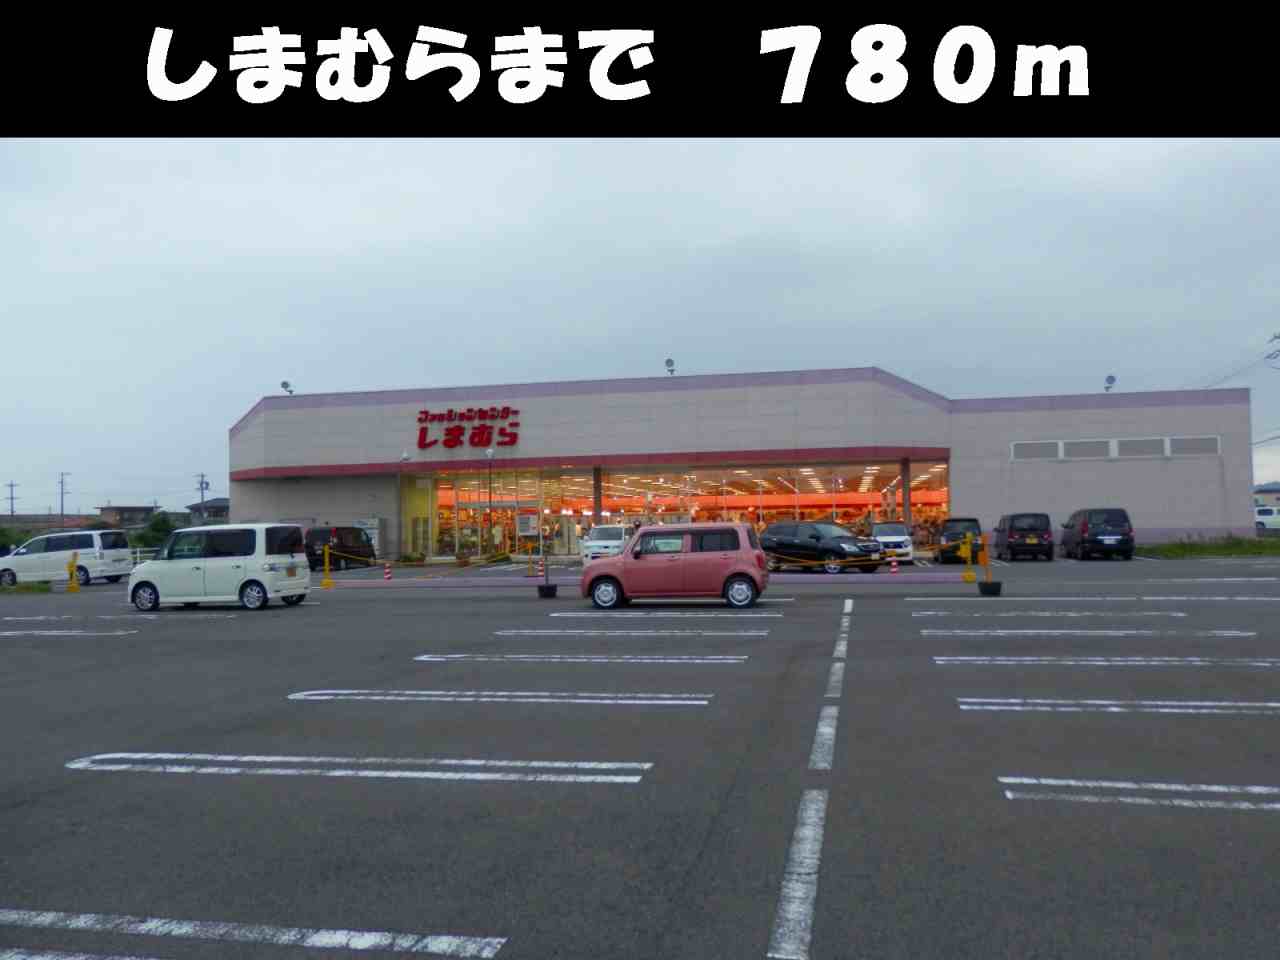 Supermarket. Shimamura to (super) 780m